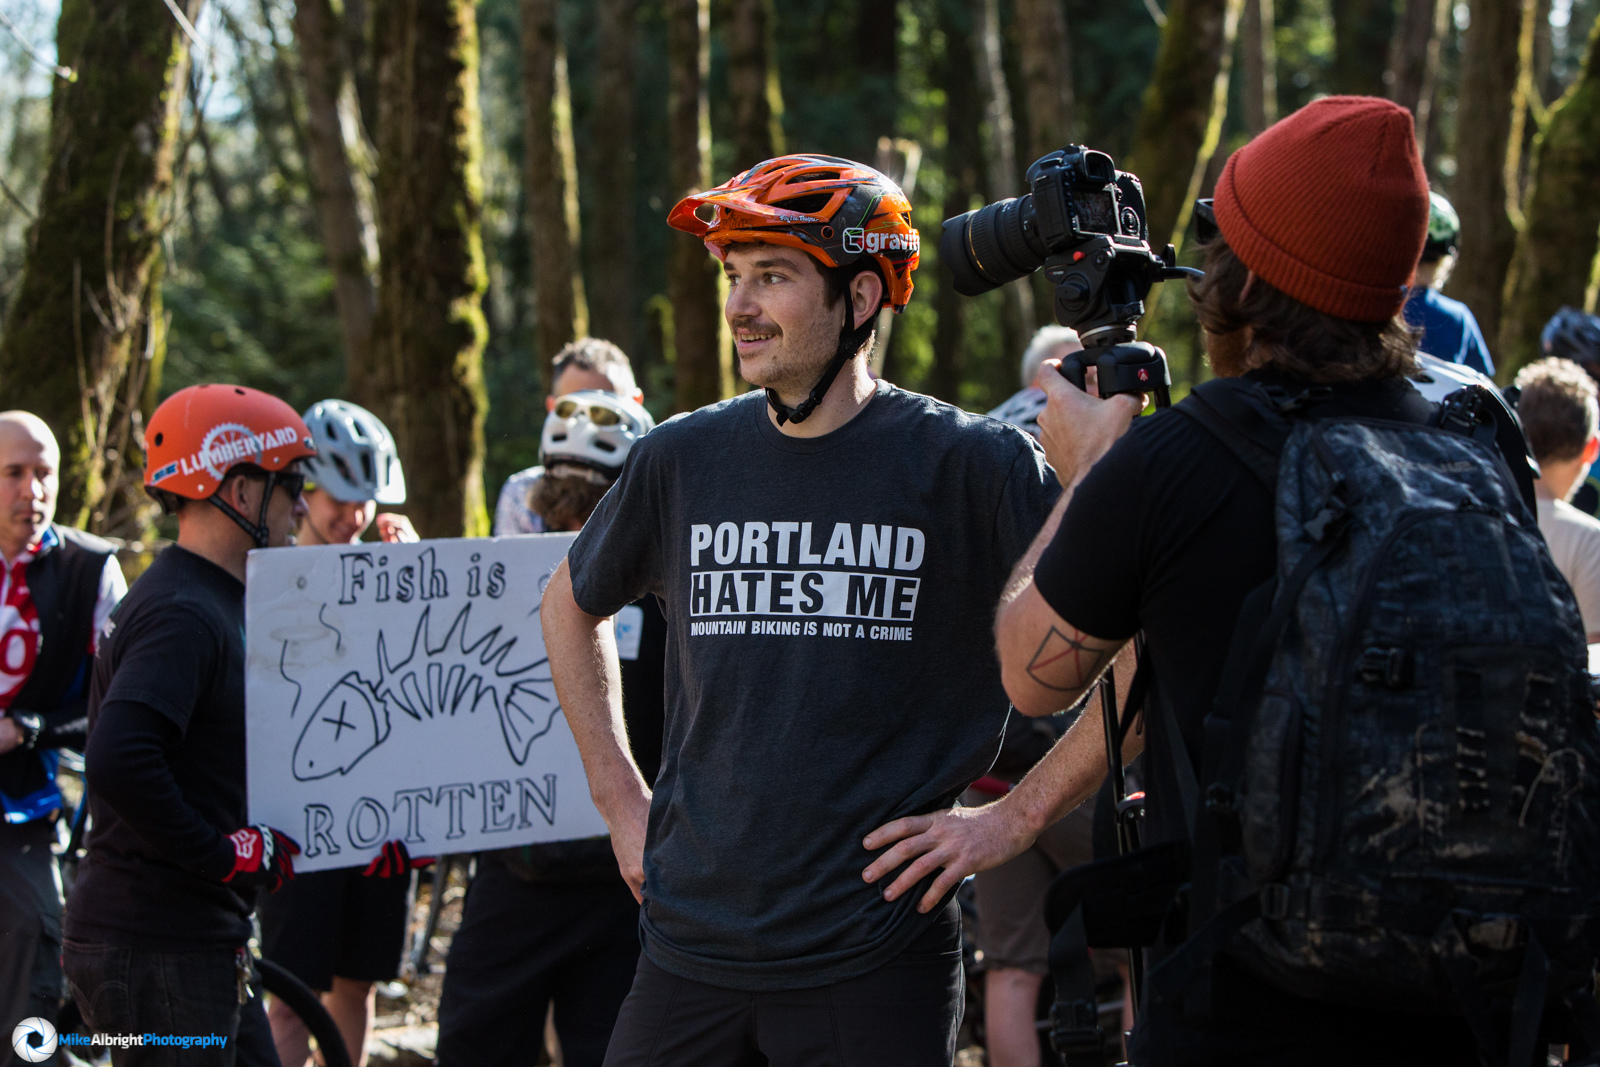 Riverview Protest Ride
3-16-2015
Portland, Oregon